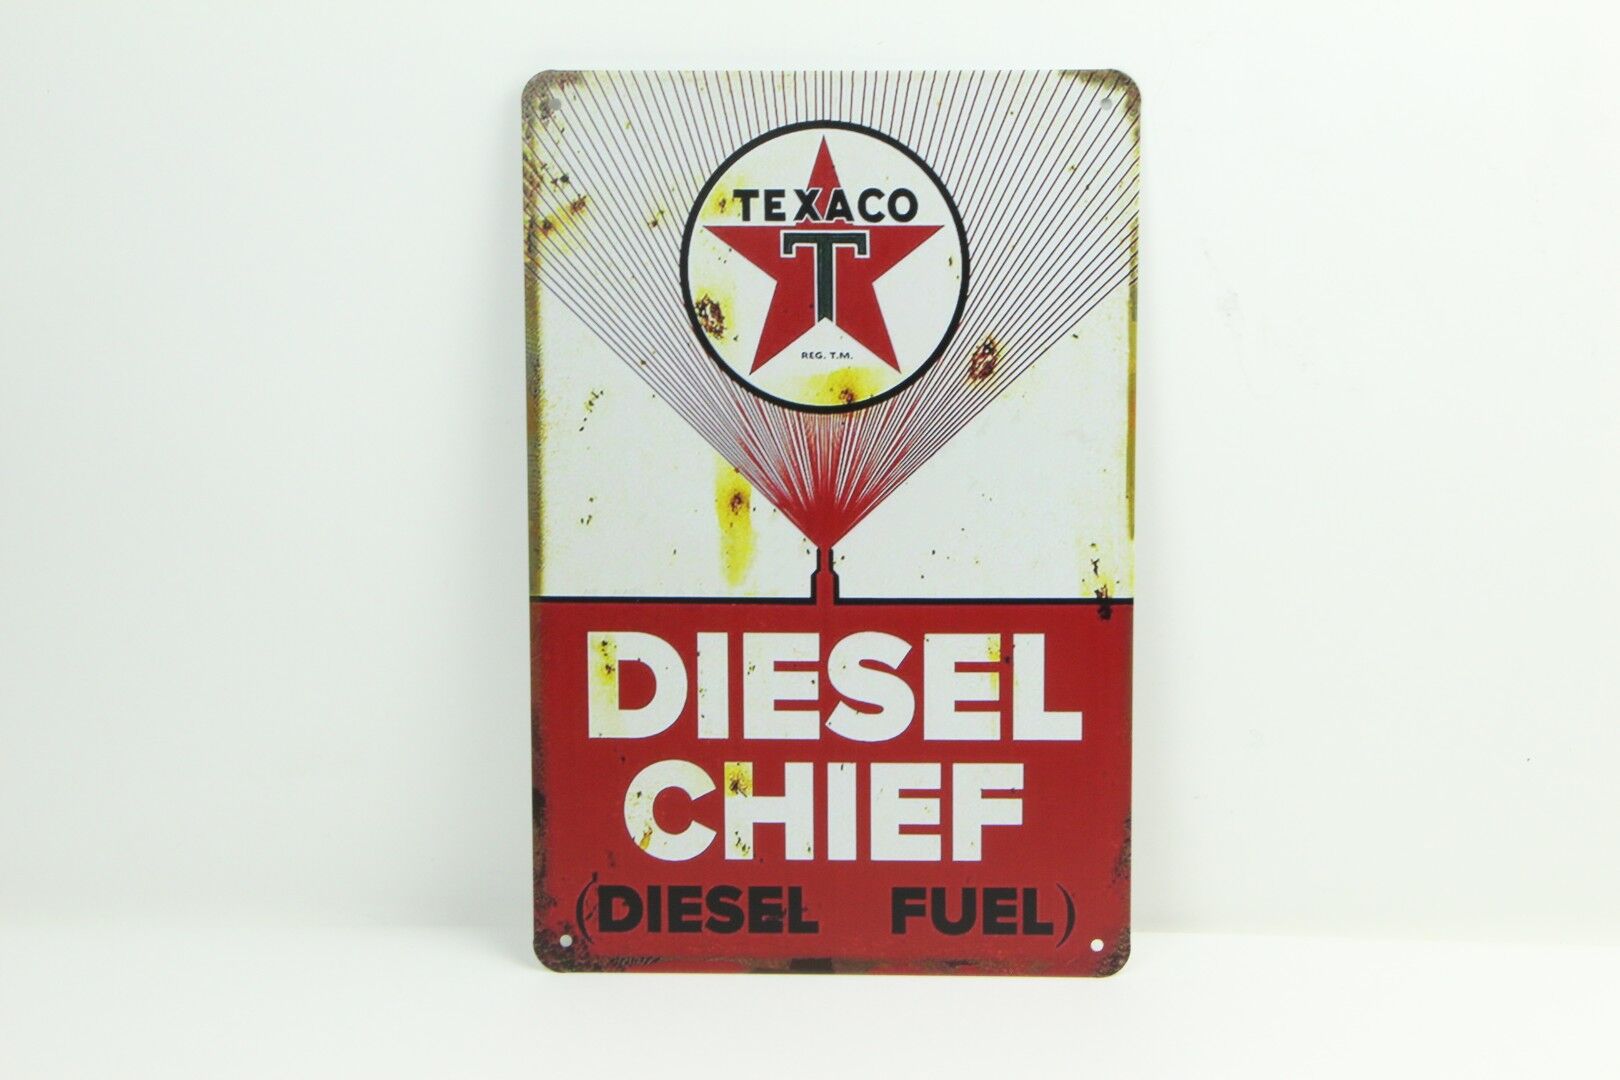 Табличка настенная "Texaco T diesel chief" 15624